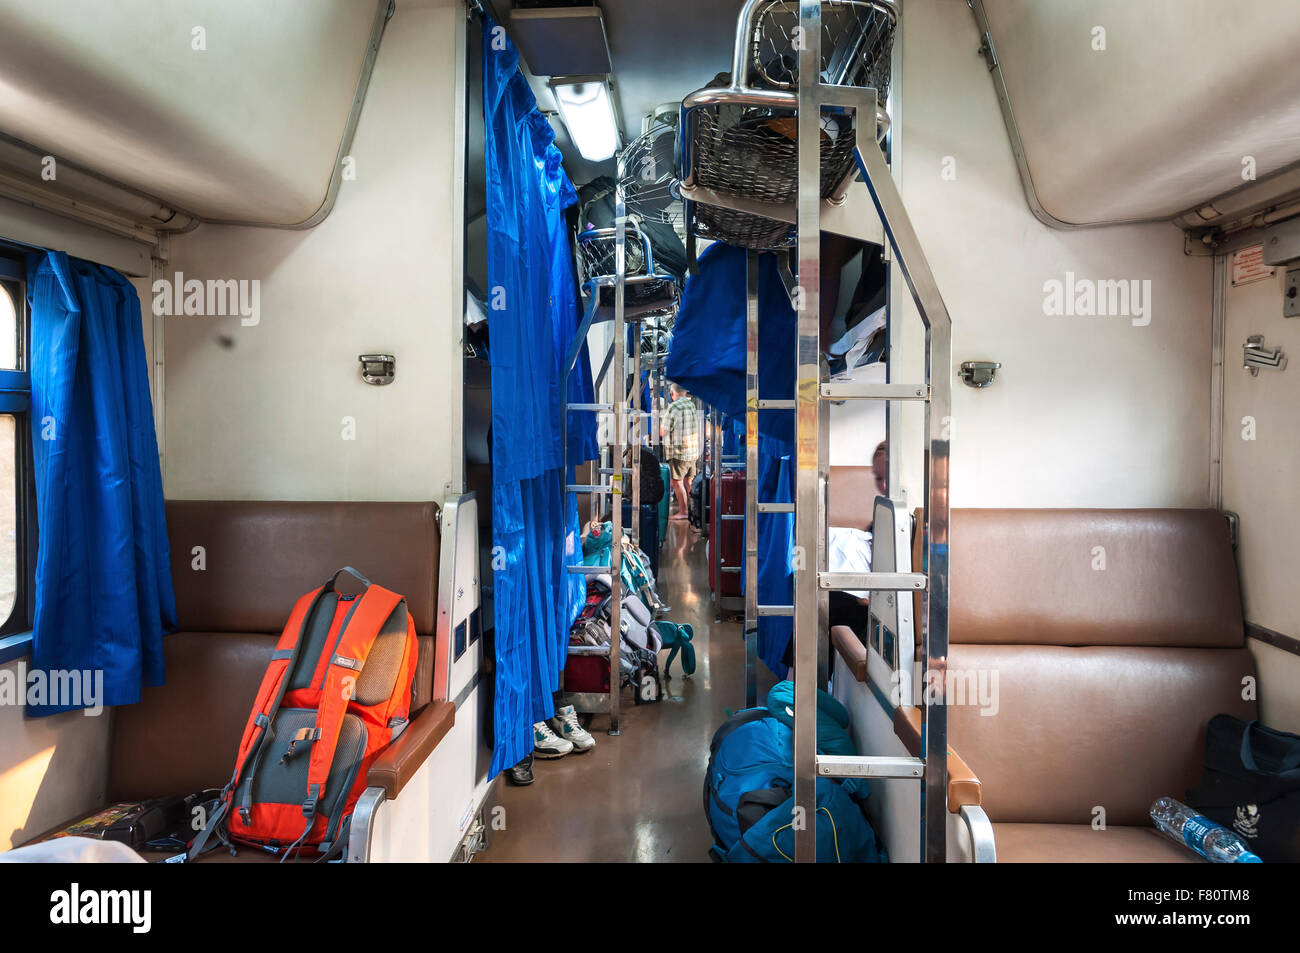 An Bord über Bangkok nach Chiang Mai Nacht Schlafwagen der Bahn Stockfoto